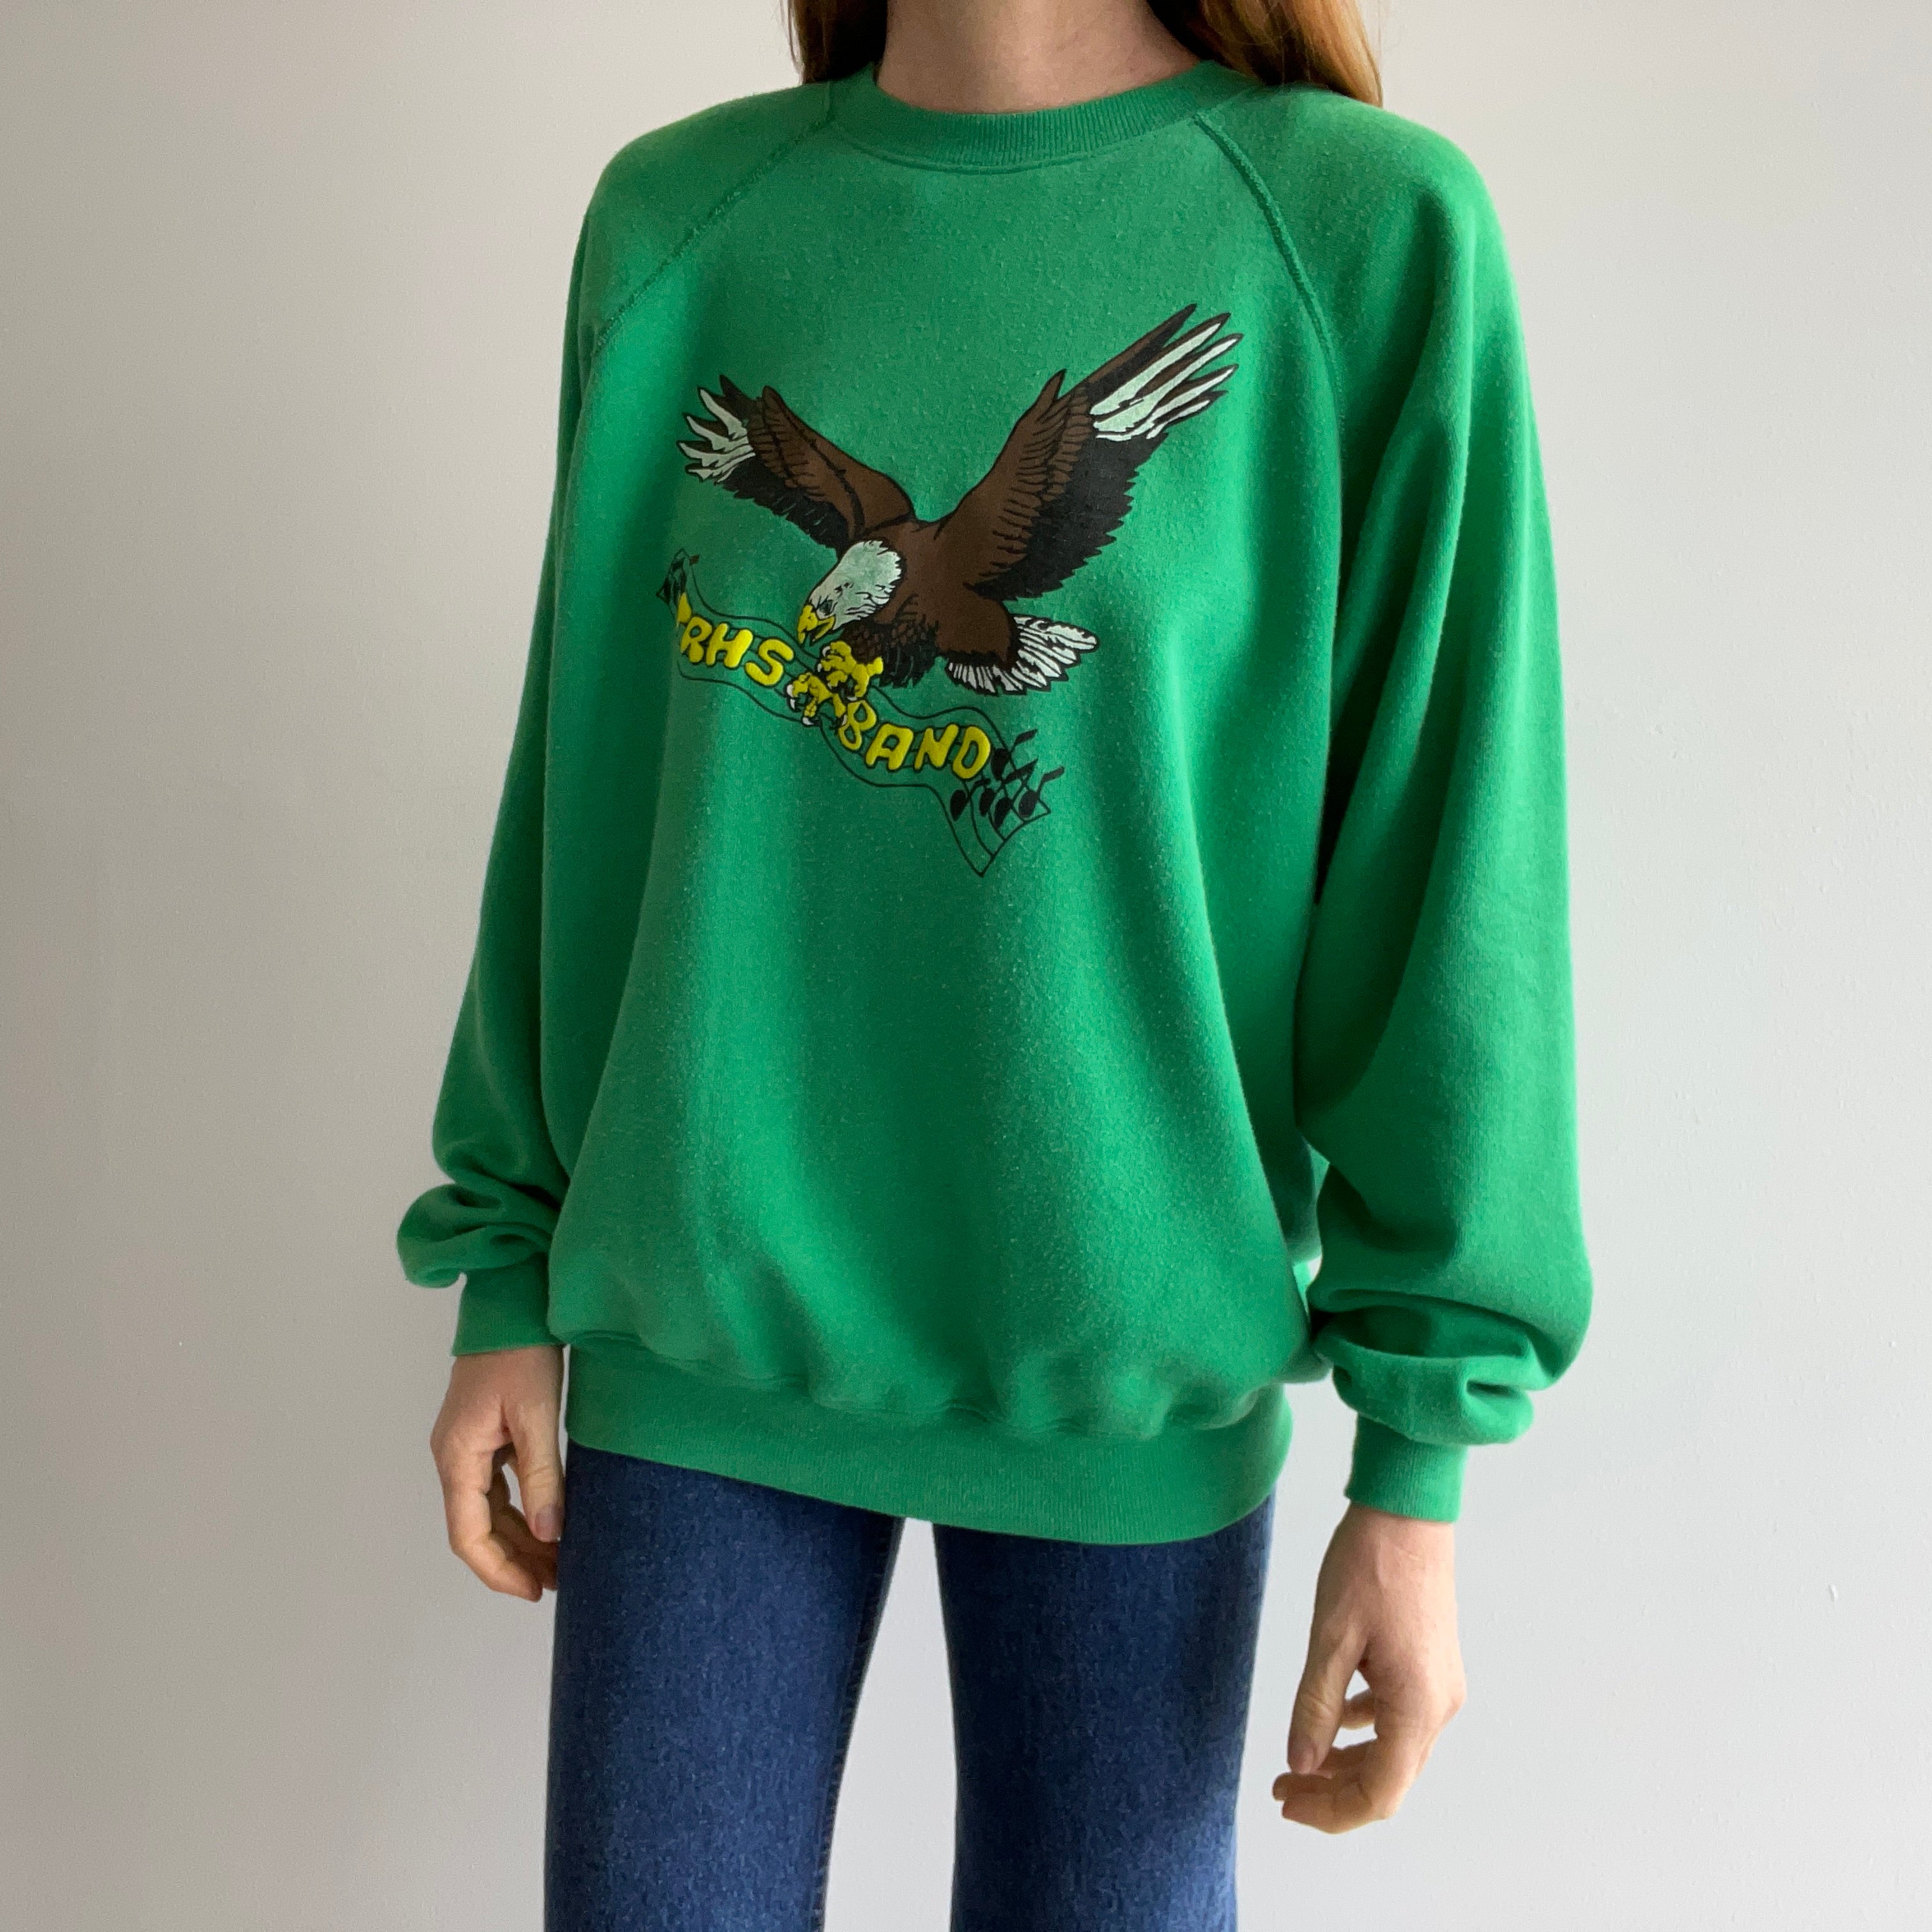 1980s TRHS Band Eagle Sweatshirt - So Good